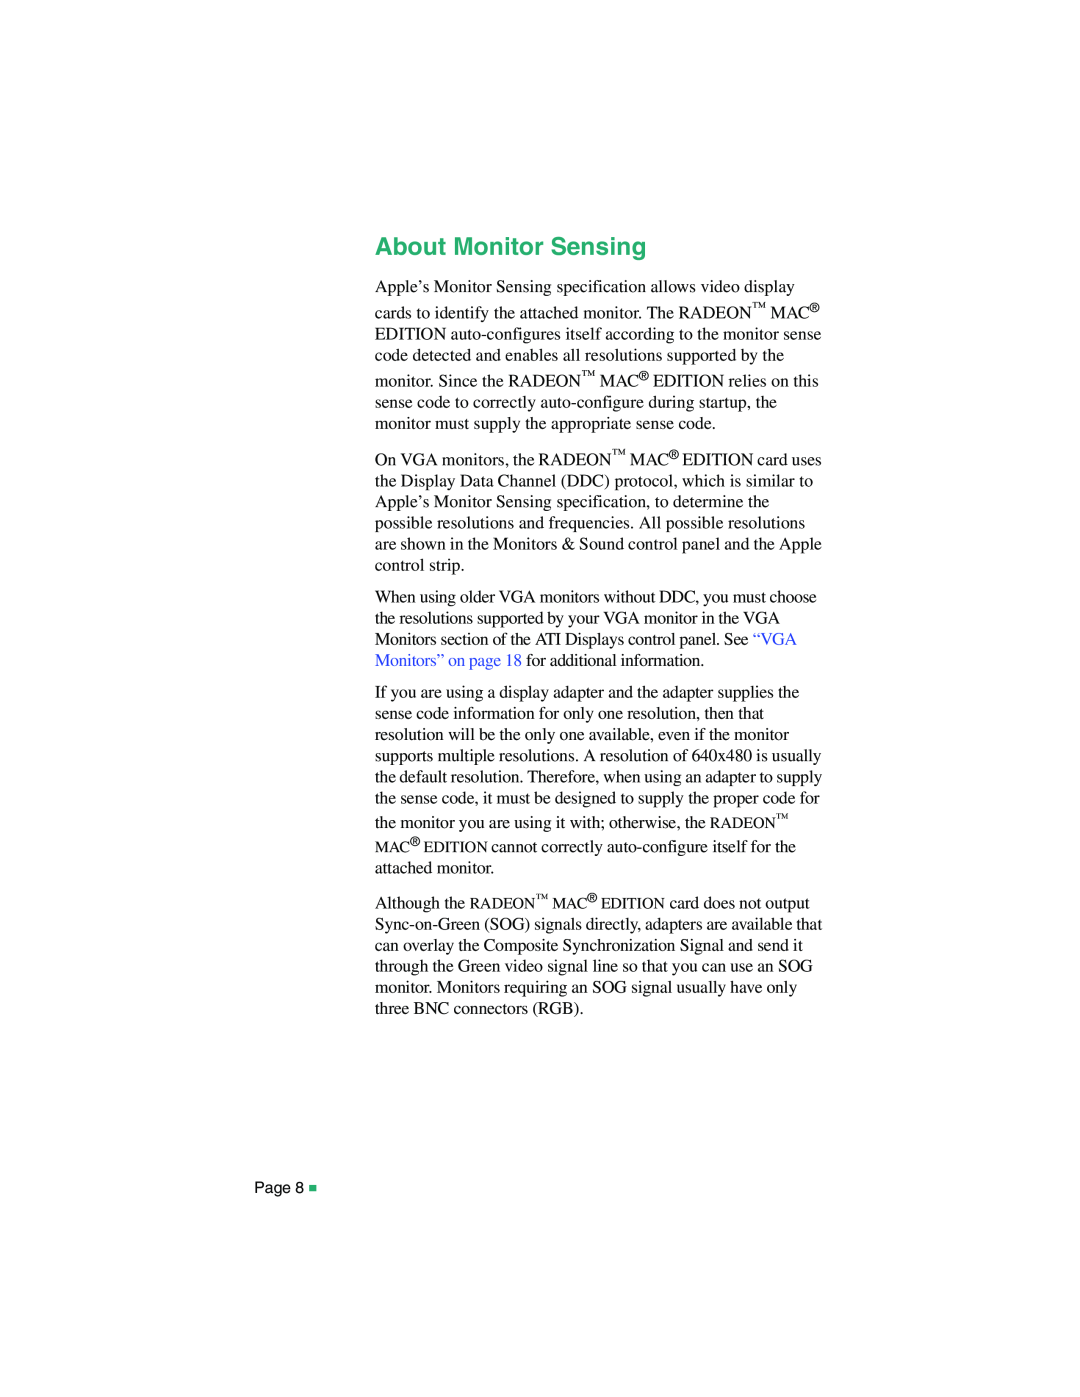 ATI Technologies 107-40214-20, RADEON MAC EDITION manual About Monitor Sensing 